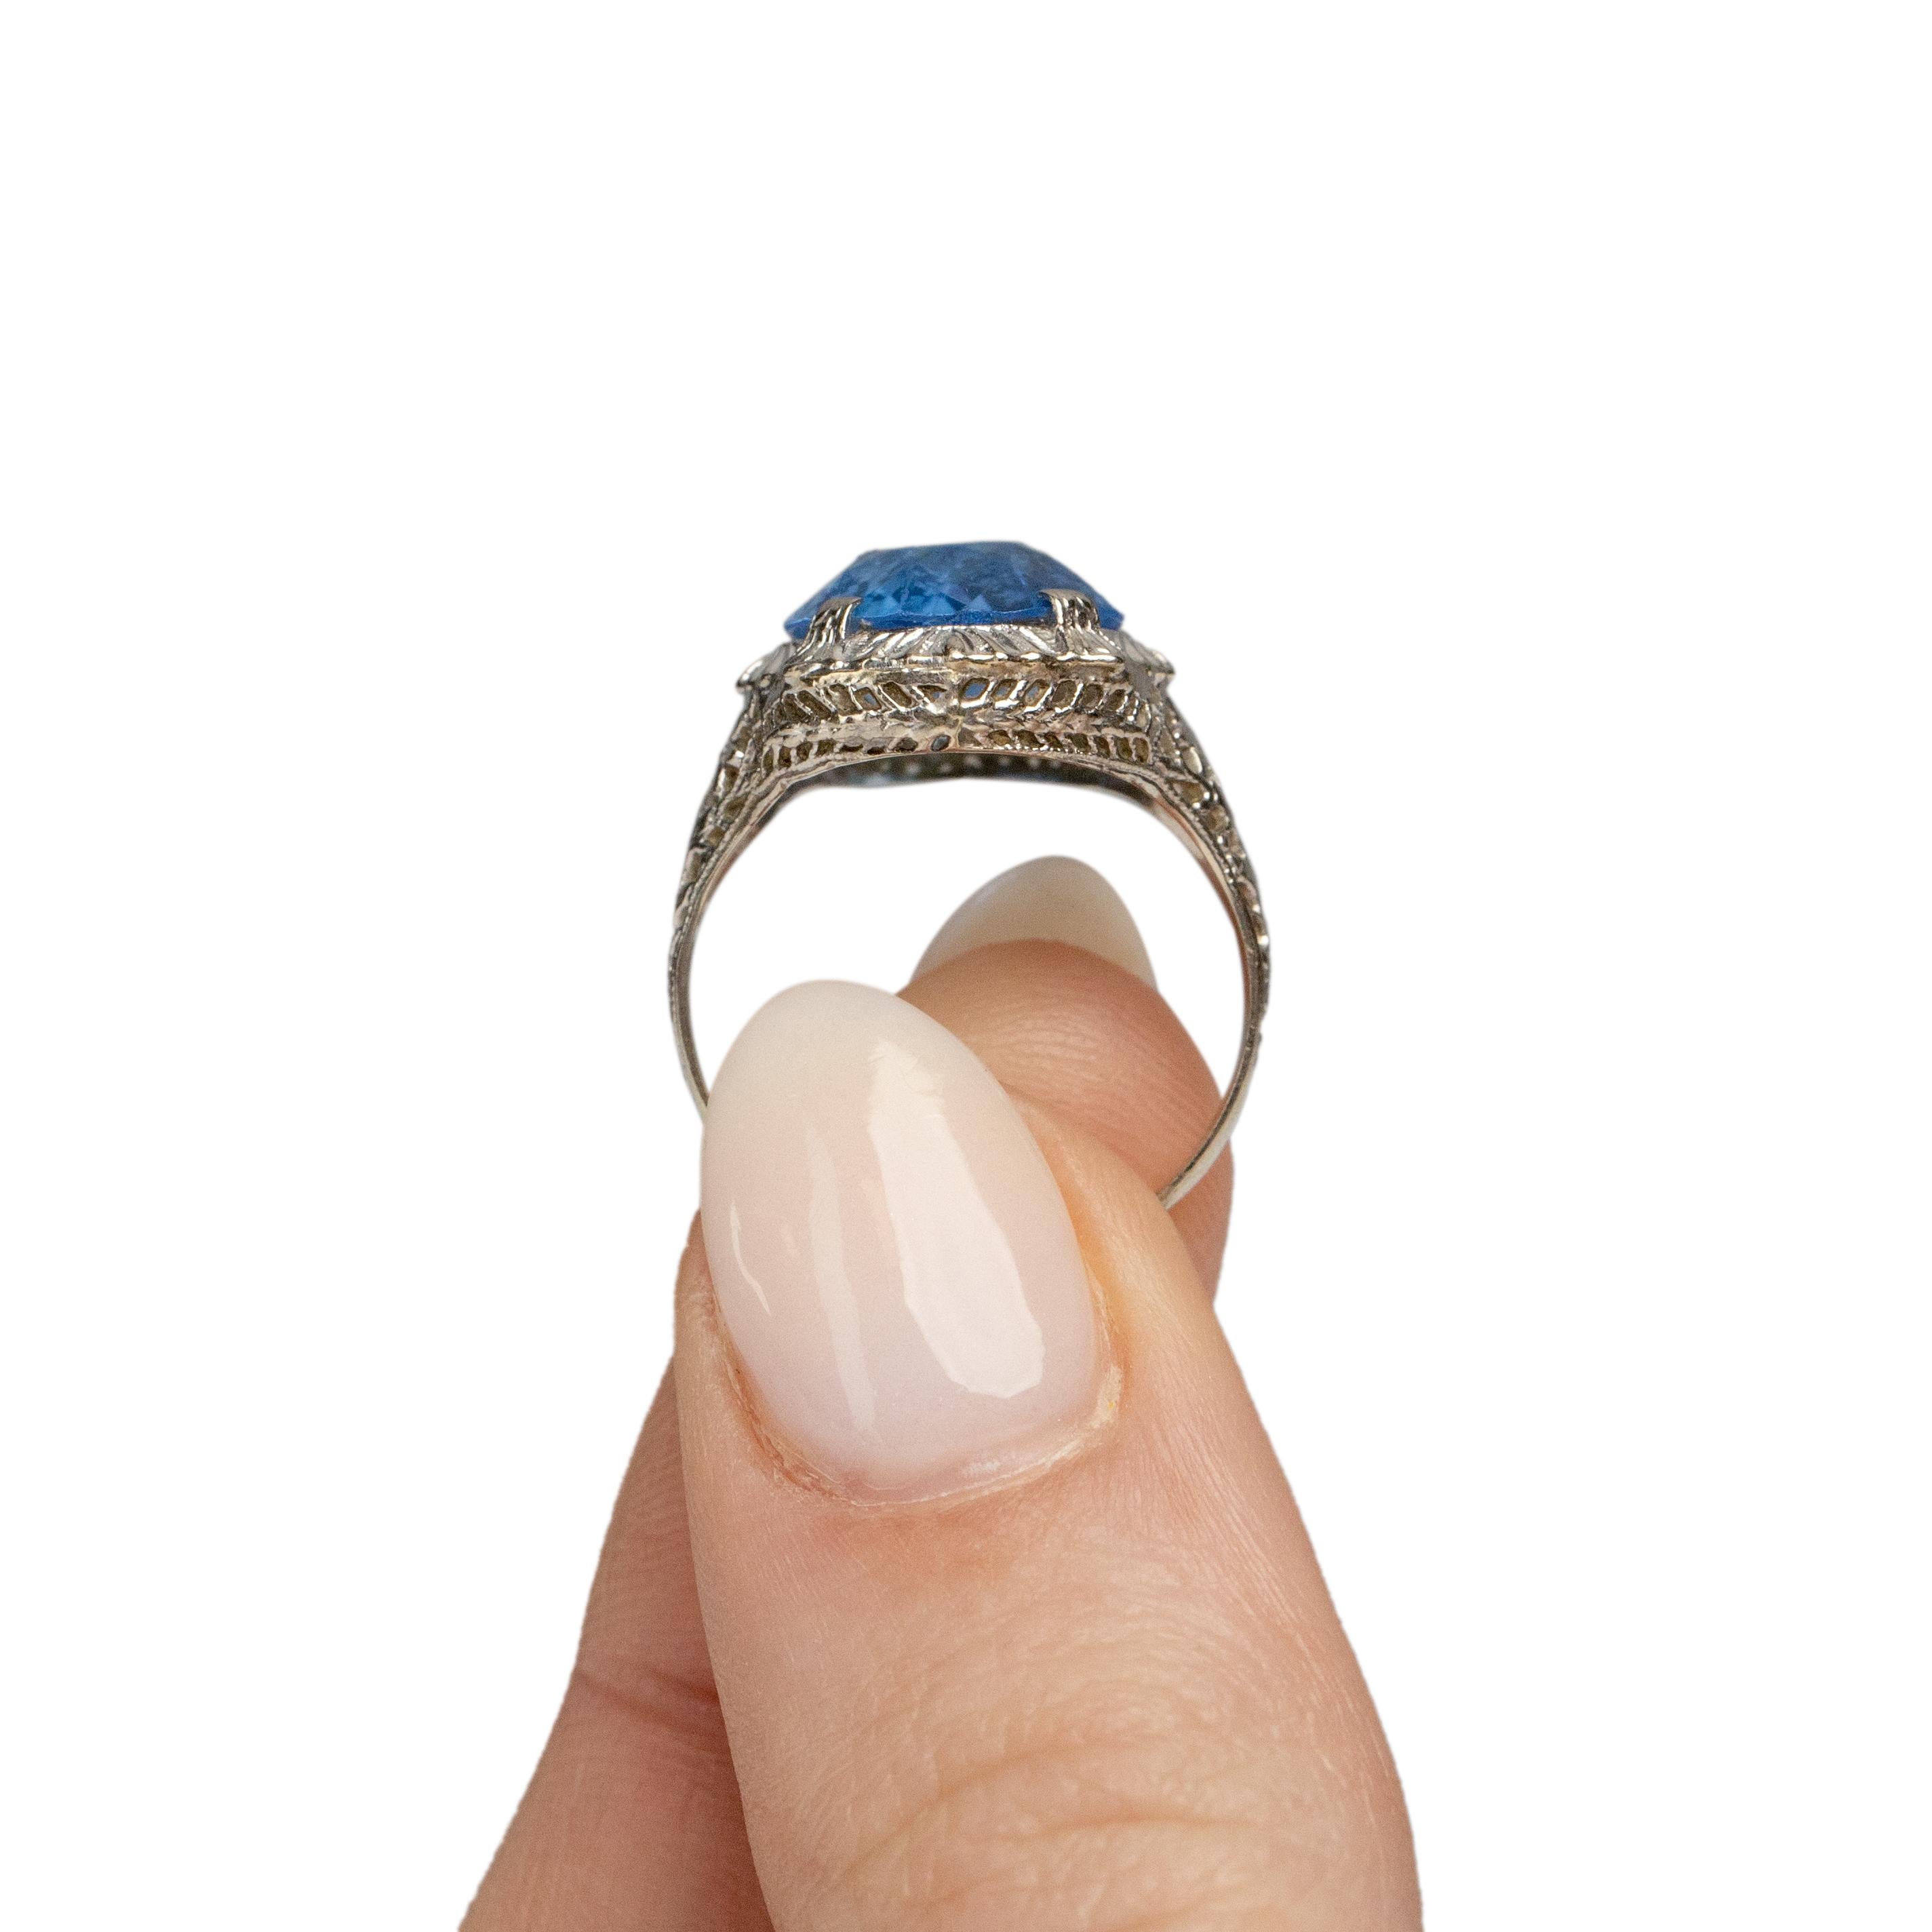 Circa 1920's 10K White Gold Vintage Filigree Blue Gem Fashion Ring 3